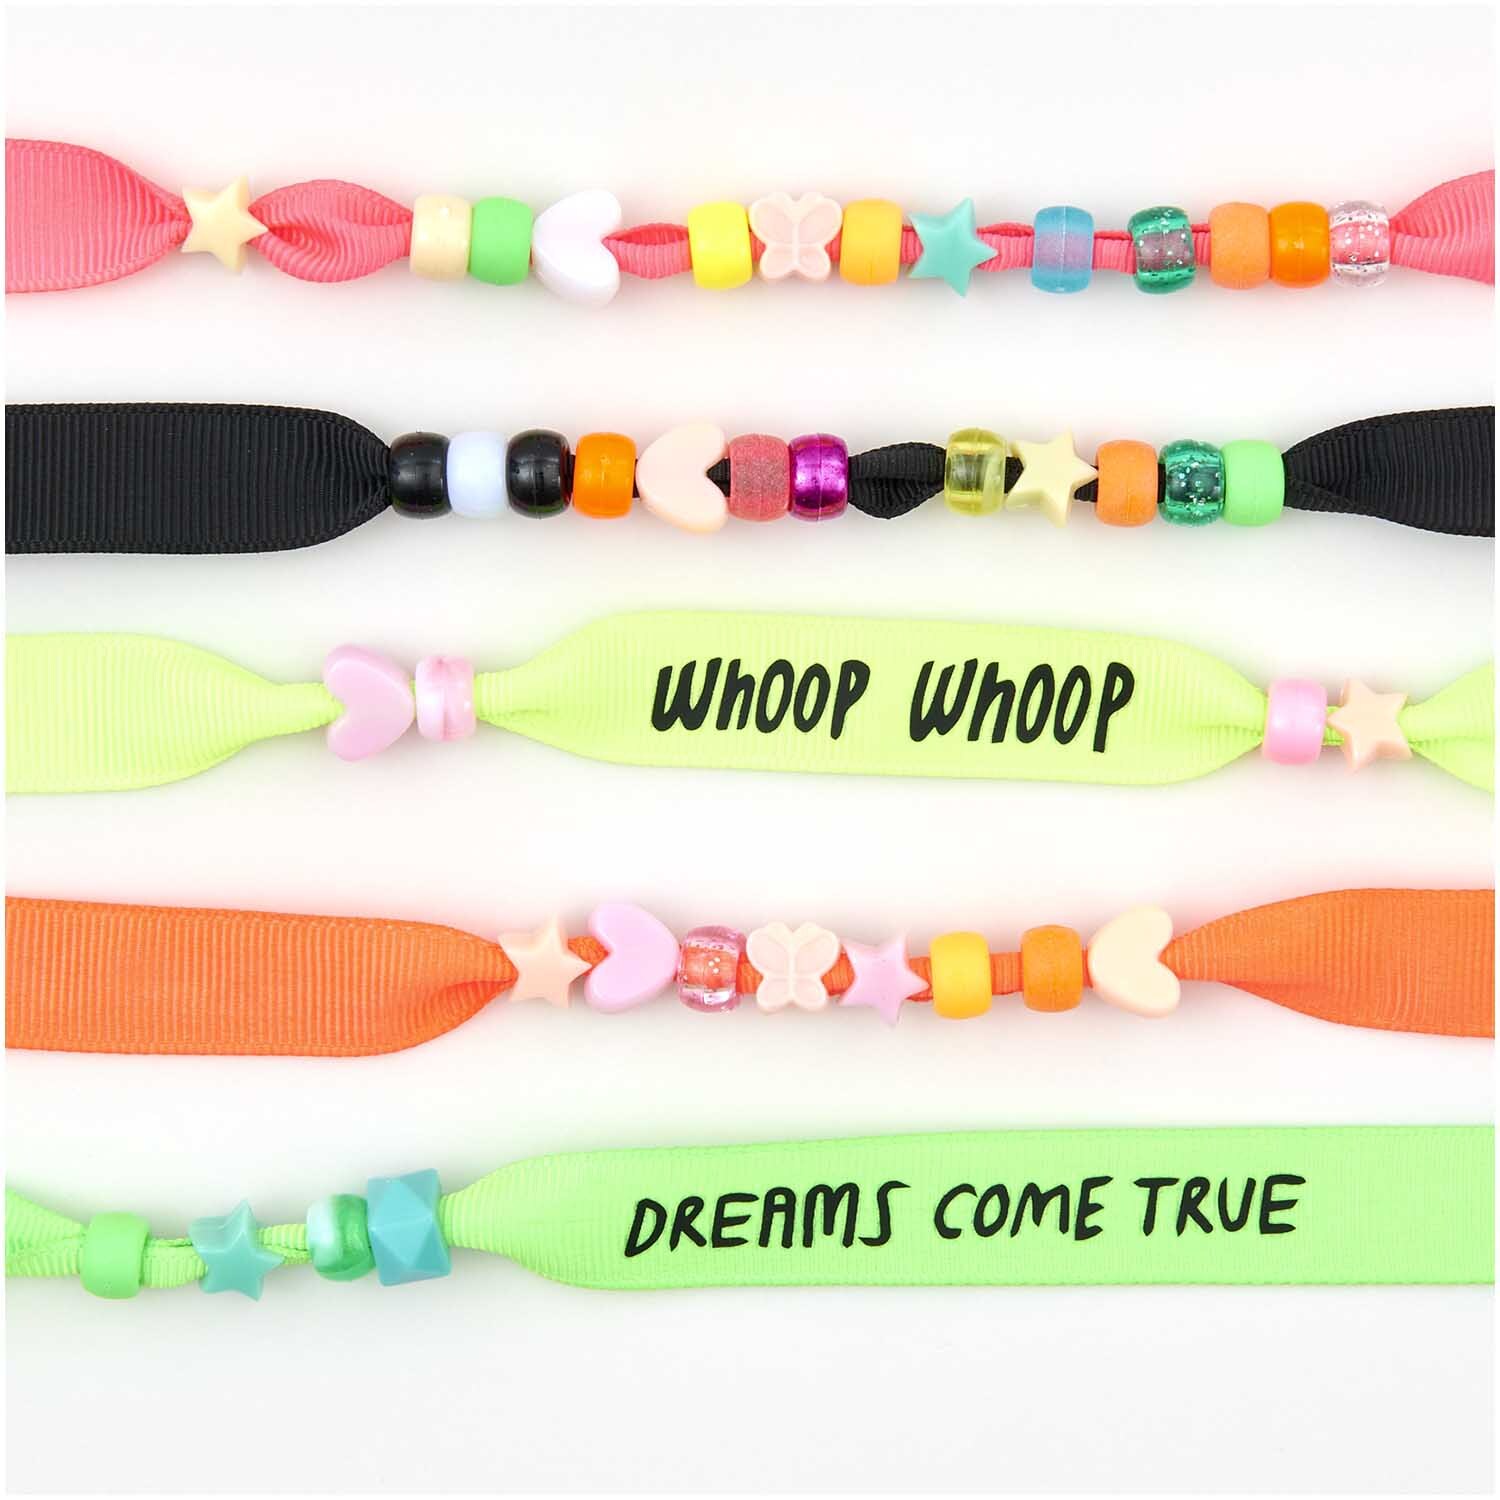 itoshii - Ponii Beads Ripsband Armbänder neon 10 Stück